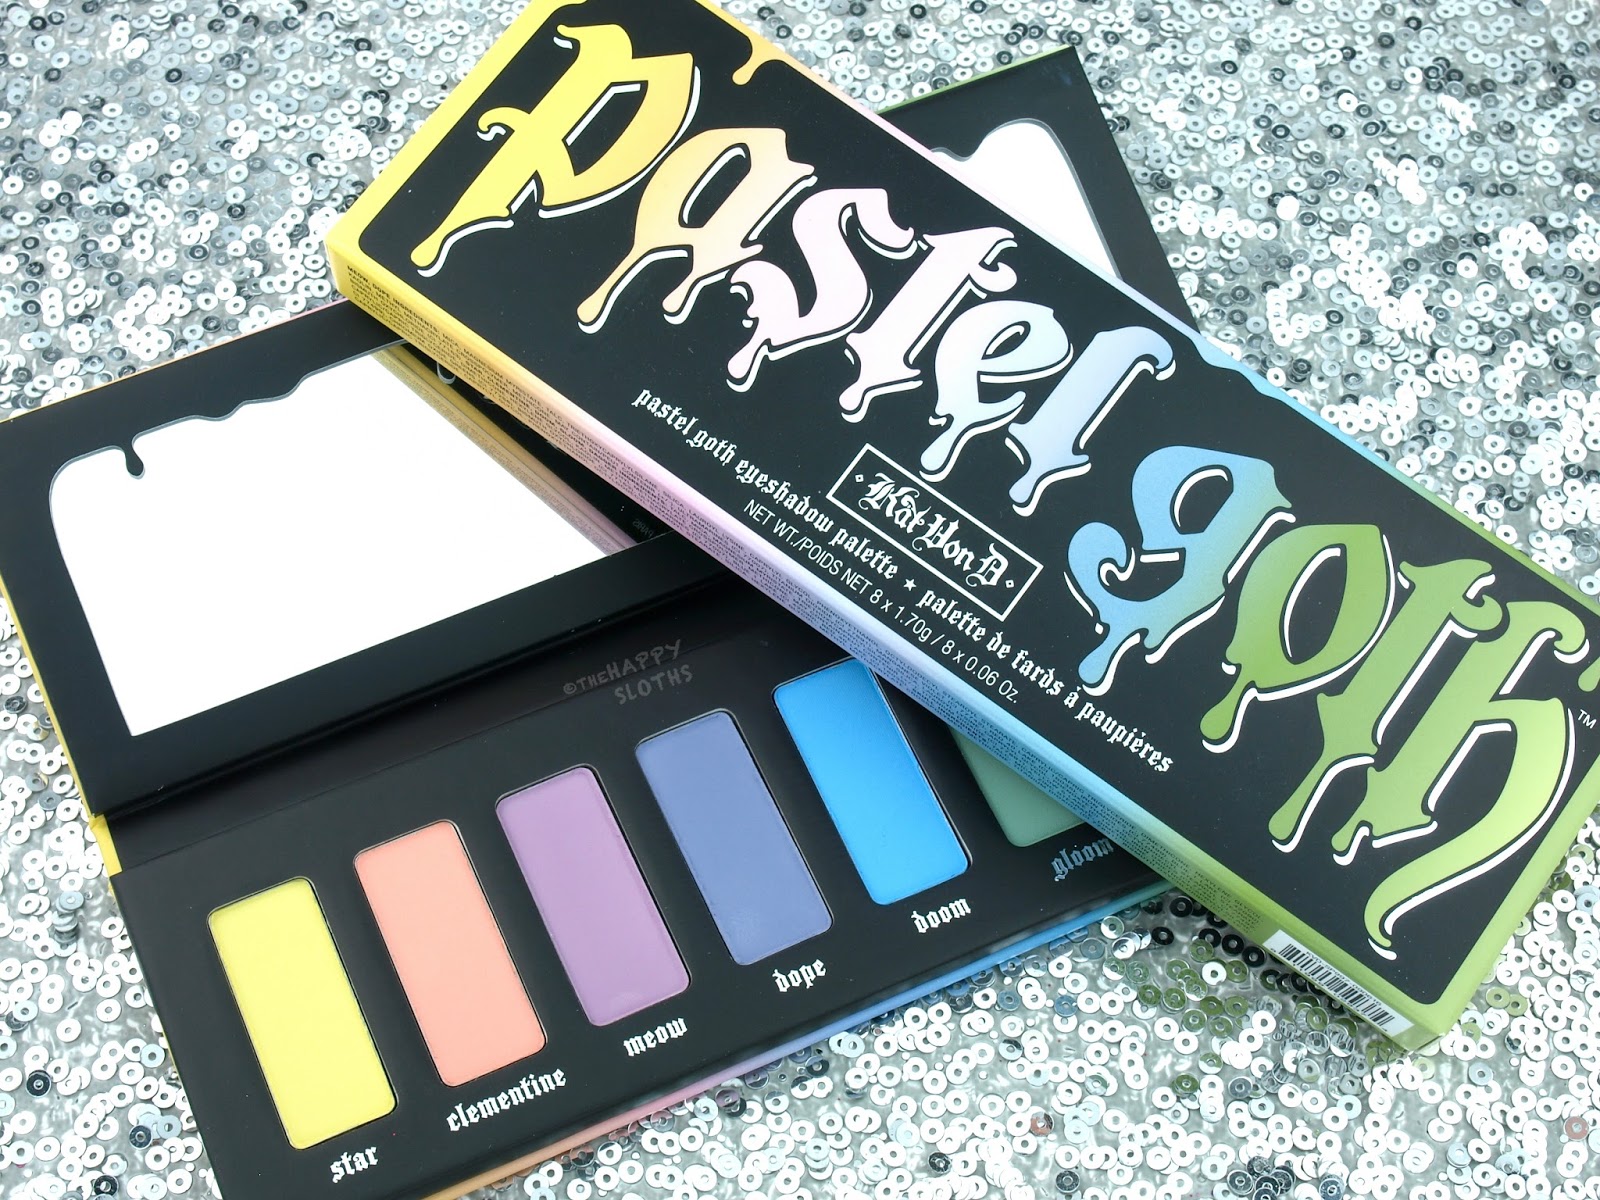 Kat Von D Pastel Goth Eyeshadow Palette: Review and Swatches